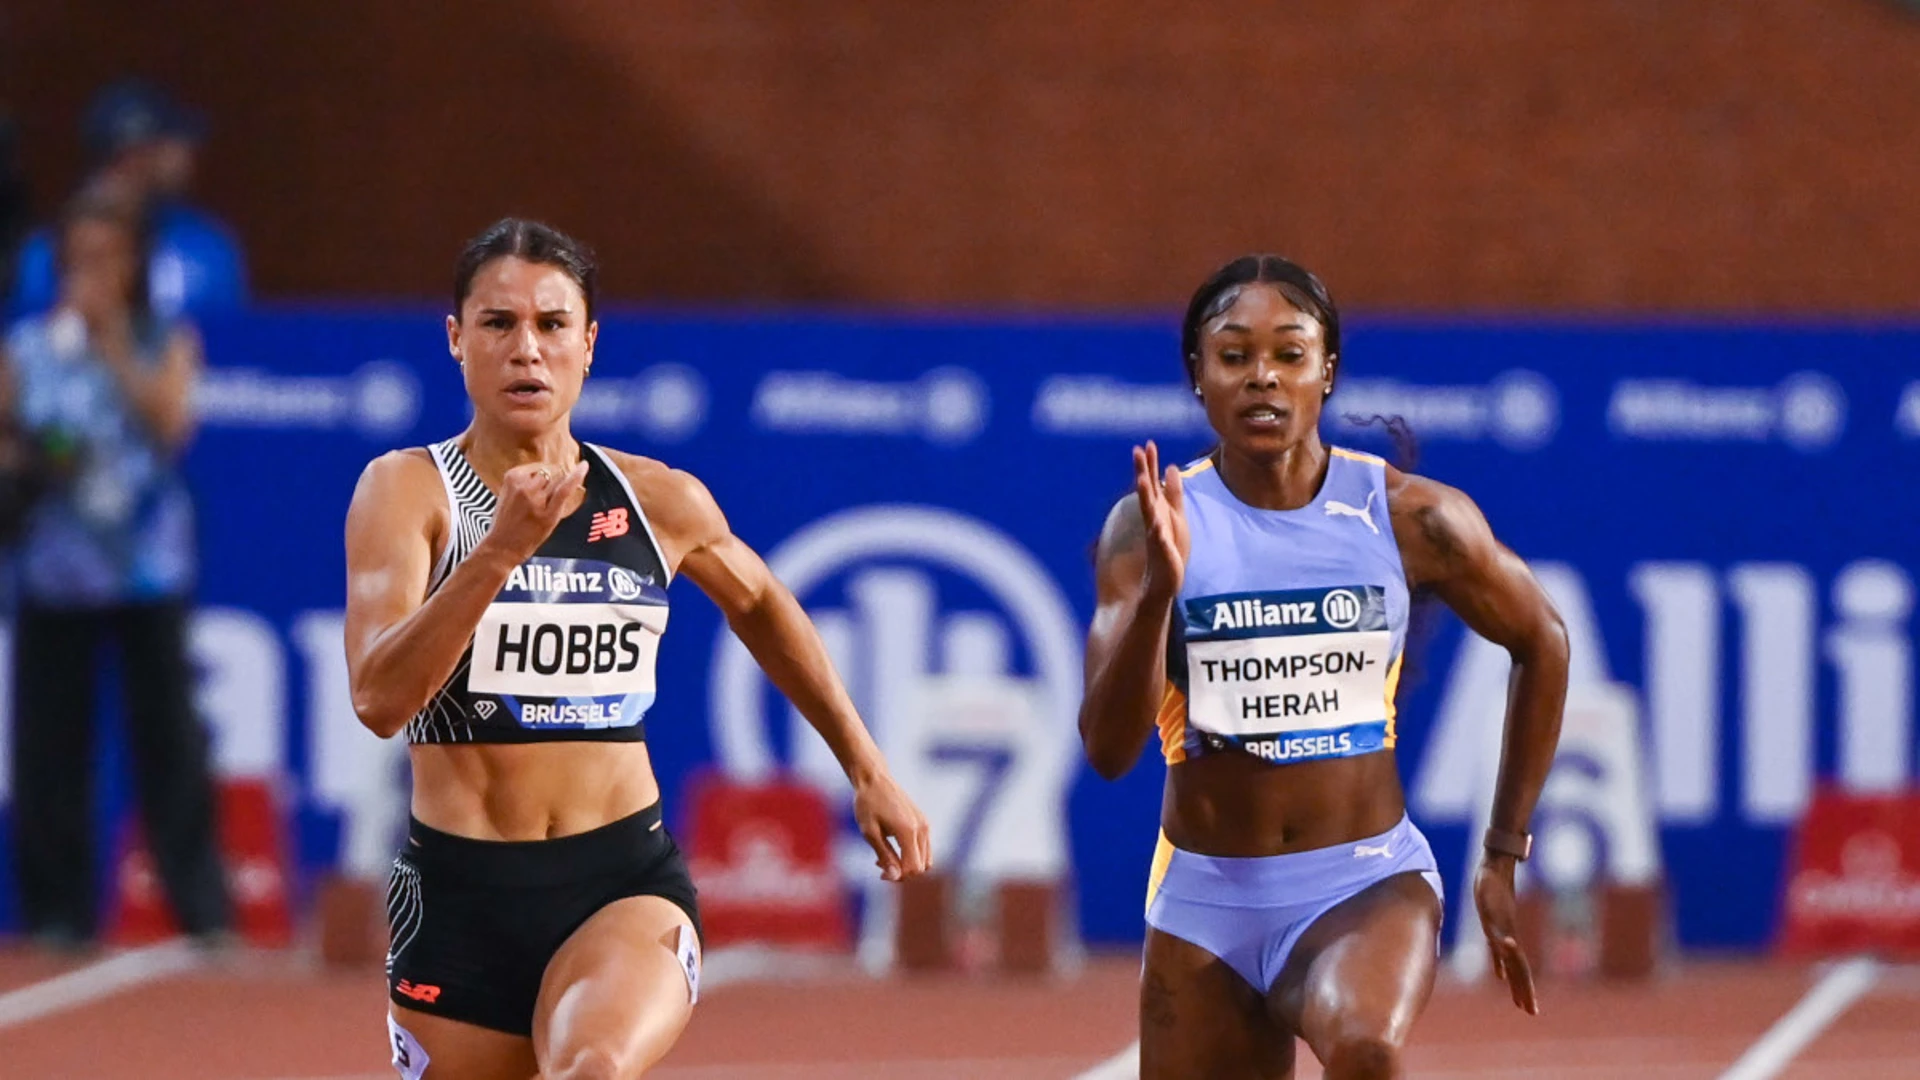 Defending champion Thompson-Herah to miss 200m at Paris Olympics